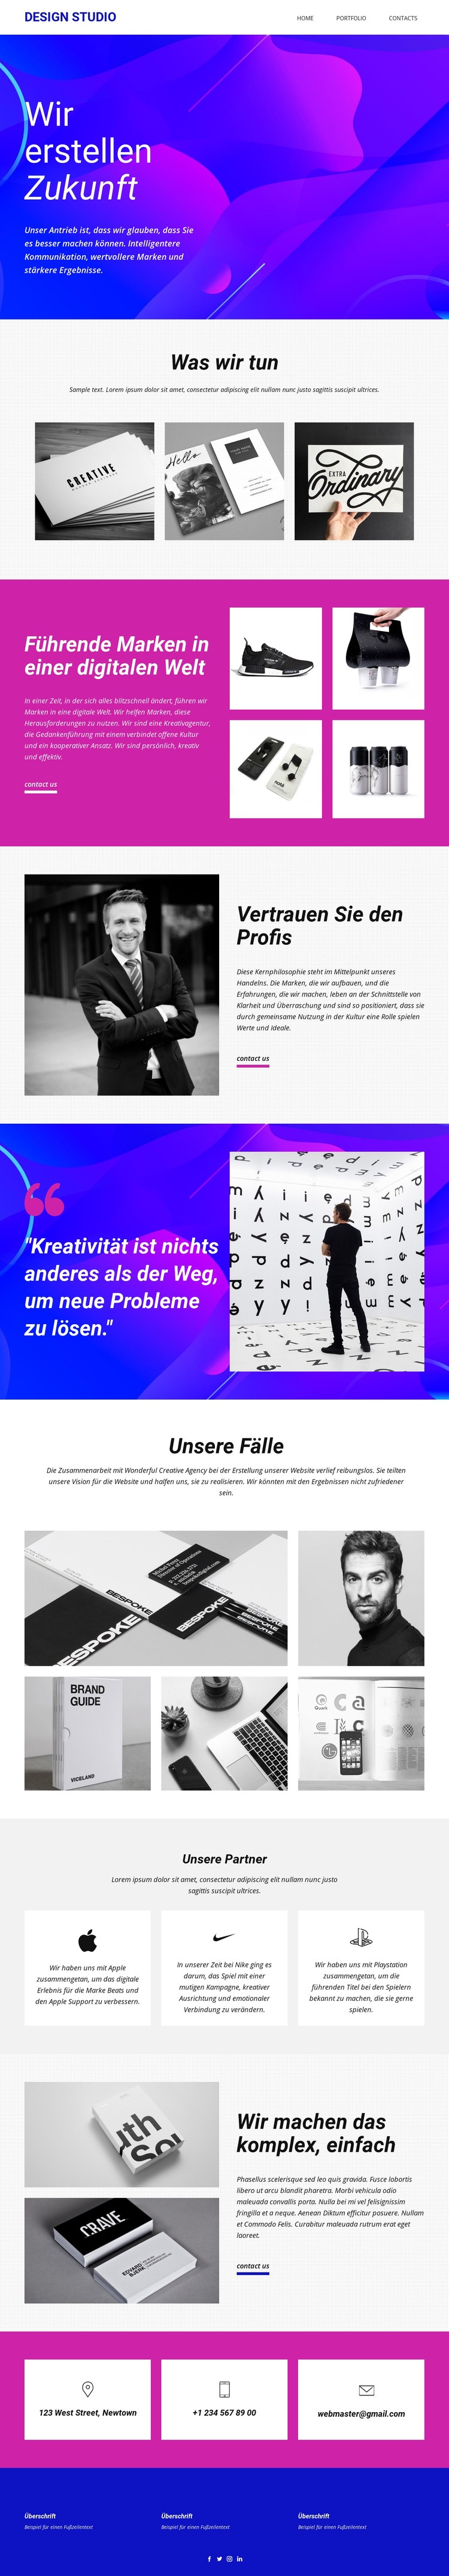 Progressive Kunst und Design Website-Modell